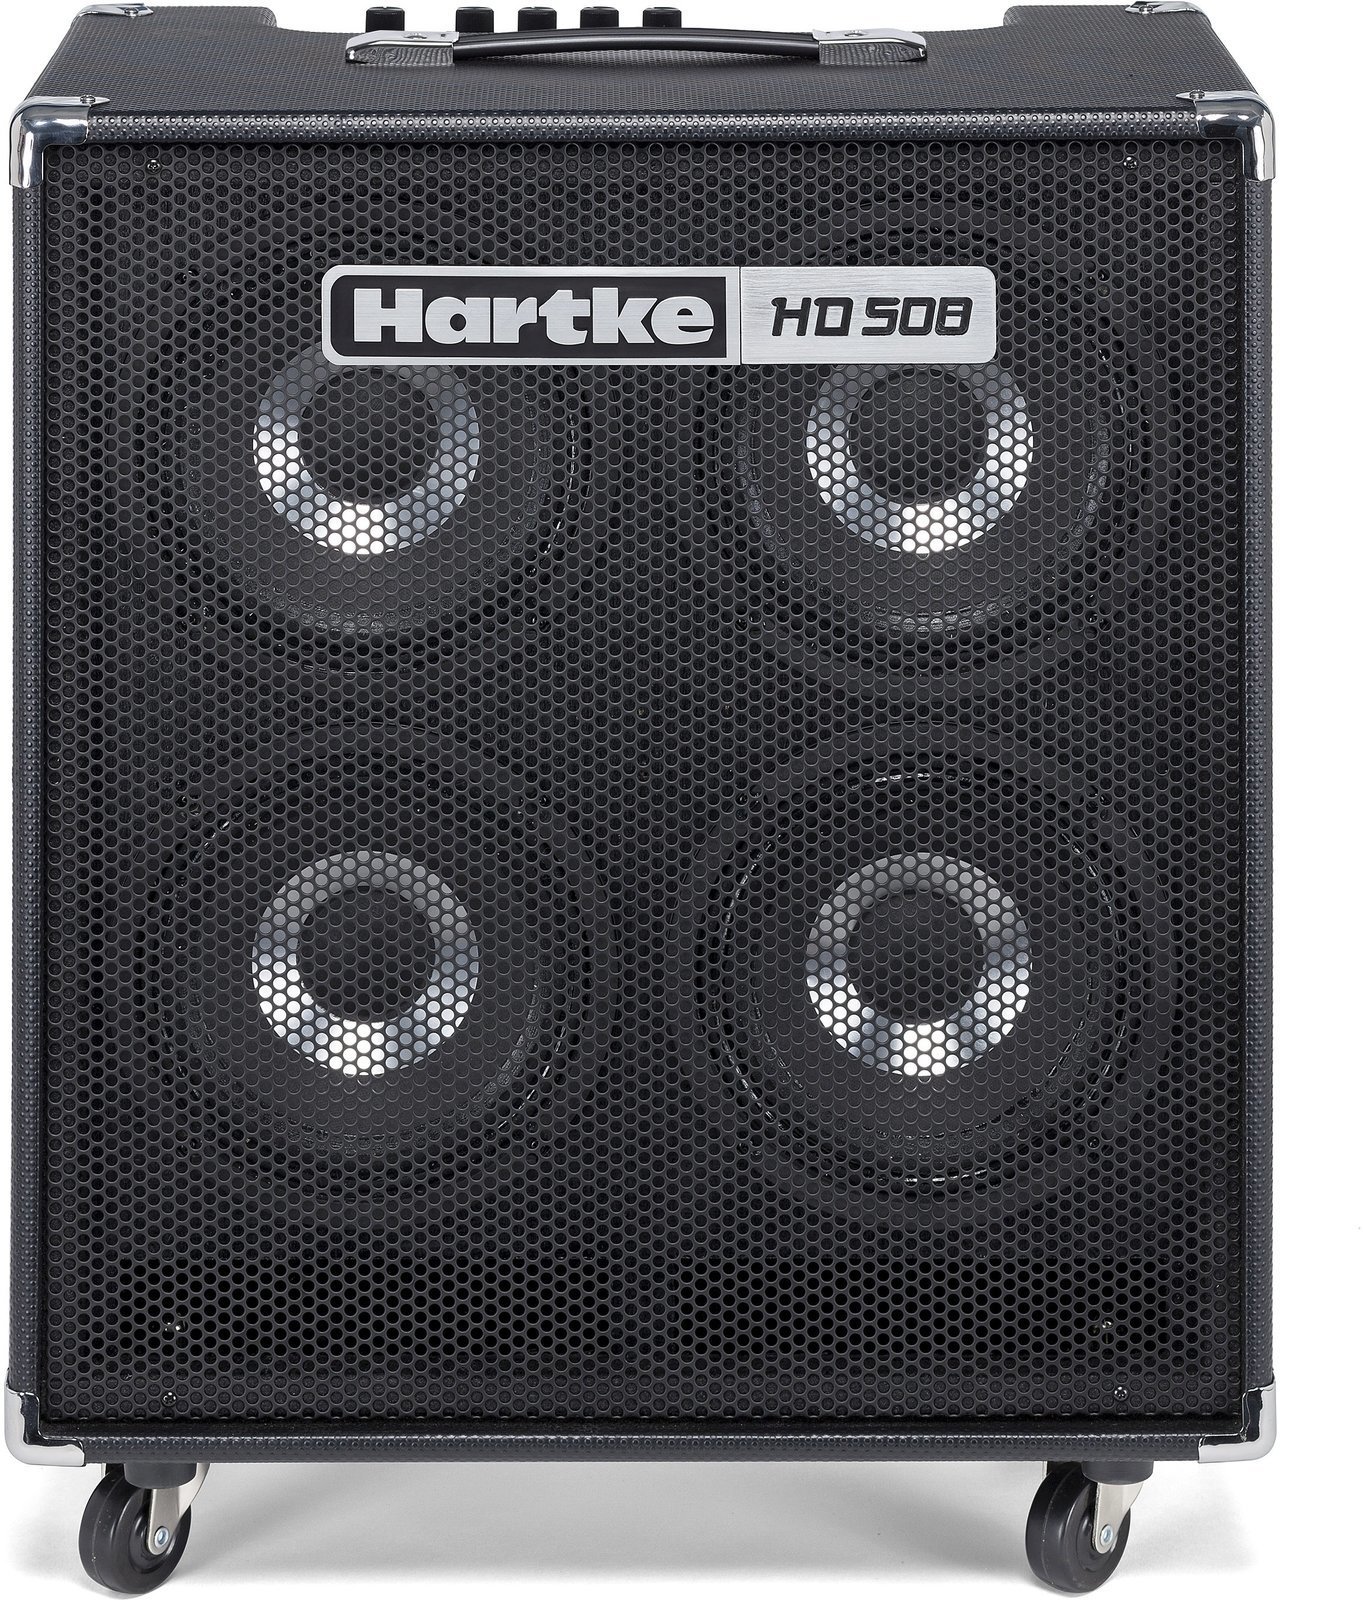 Hartke HD508 Hartke